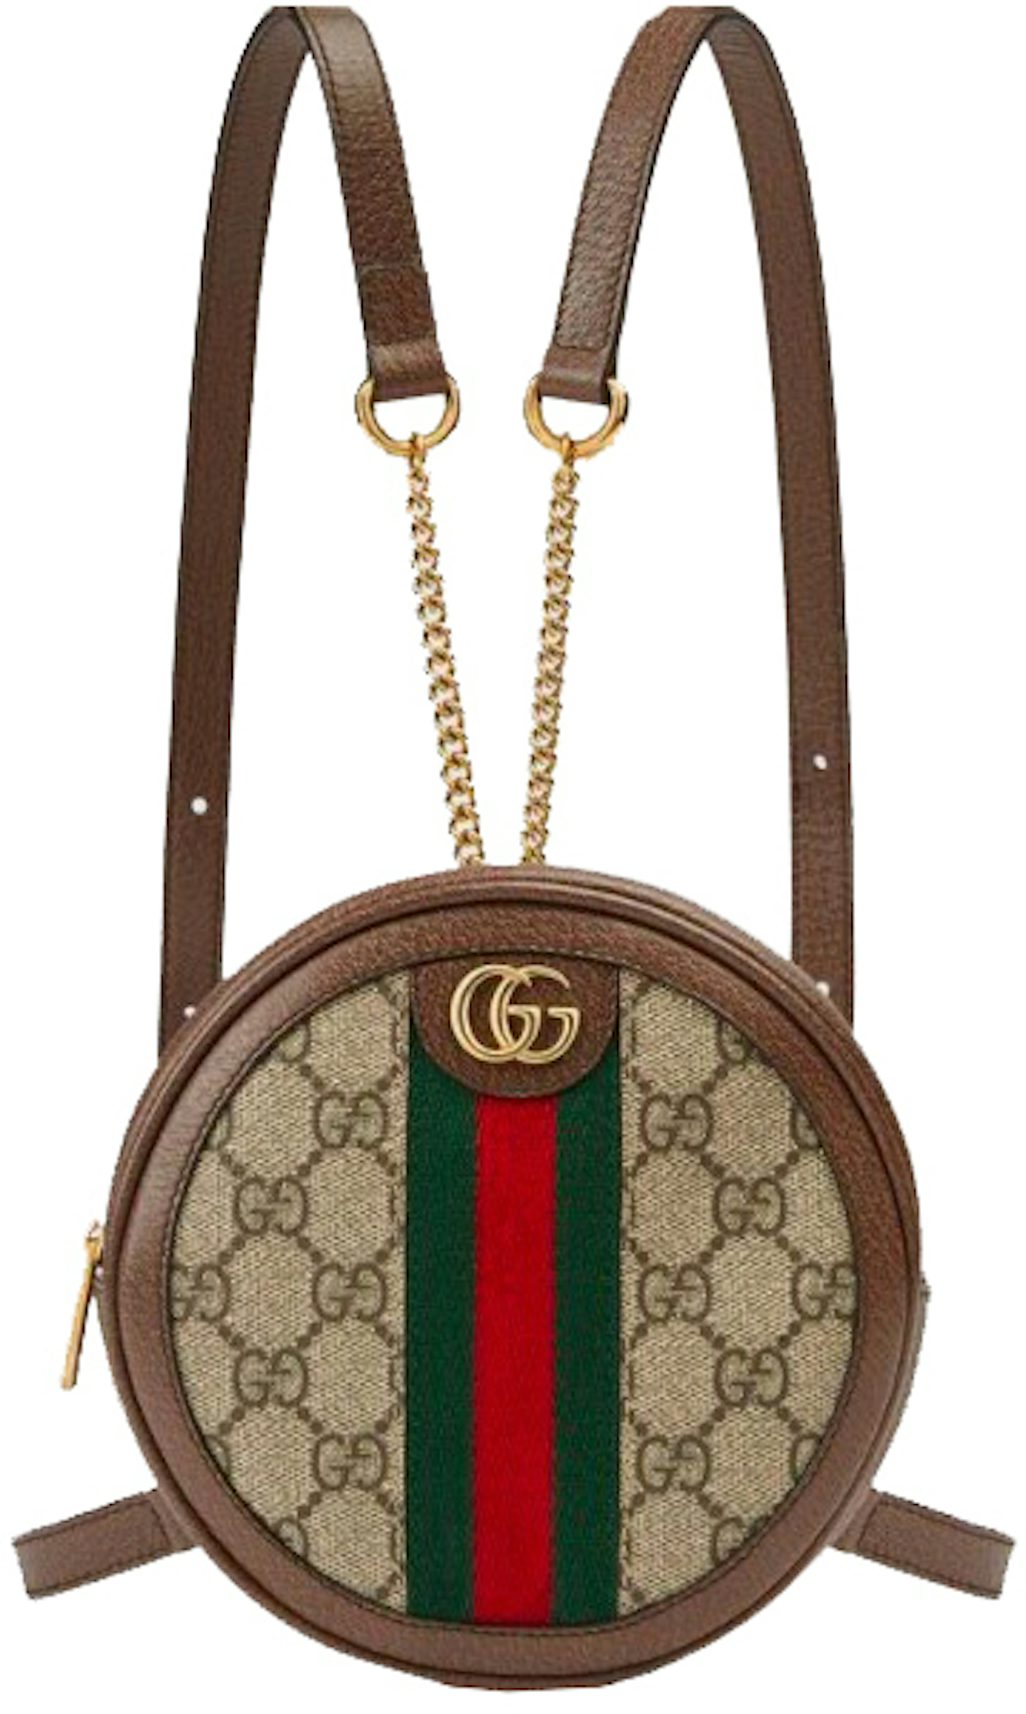 Ophidia GG small backpack - Gucci Women's Backpacks 5479659U8BT8994